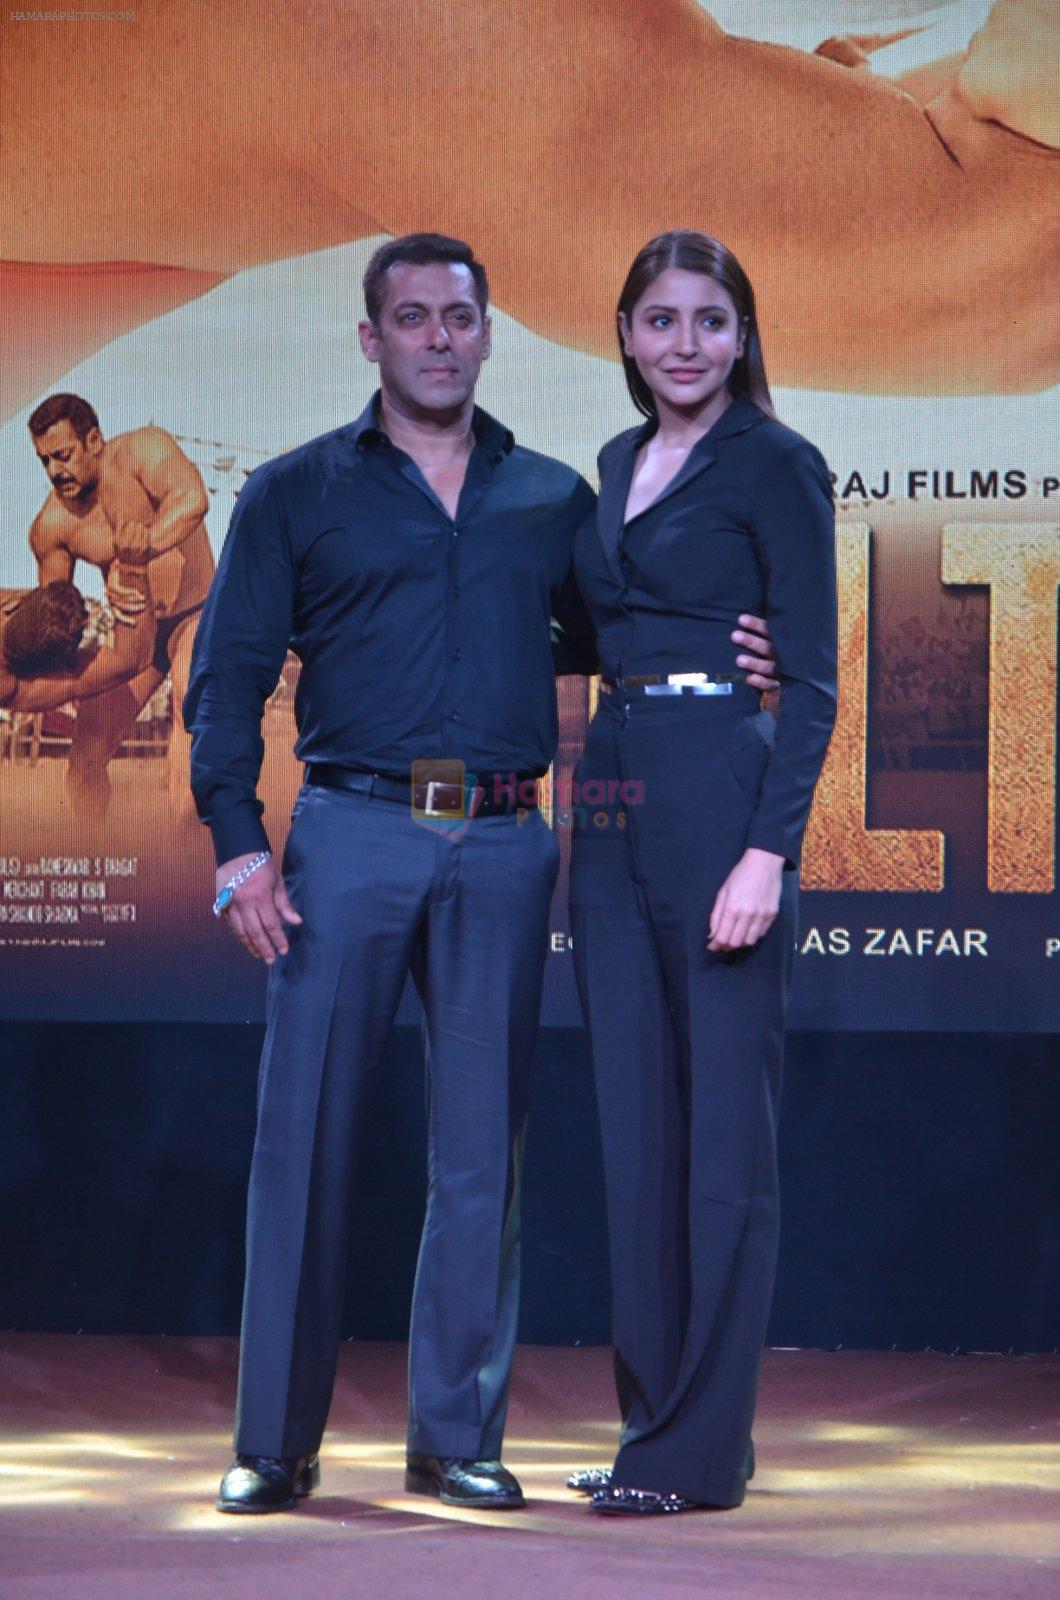 Anushka Sharma, Salman Khan at Sultan Trailer Launch on 24th May 2016